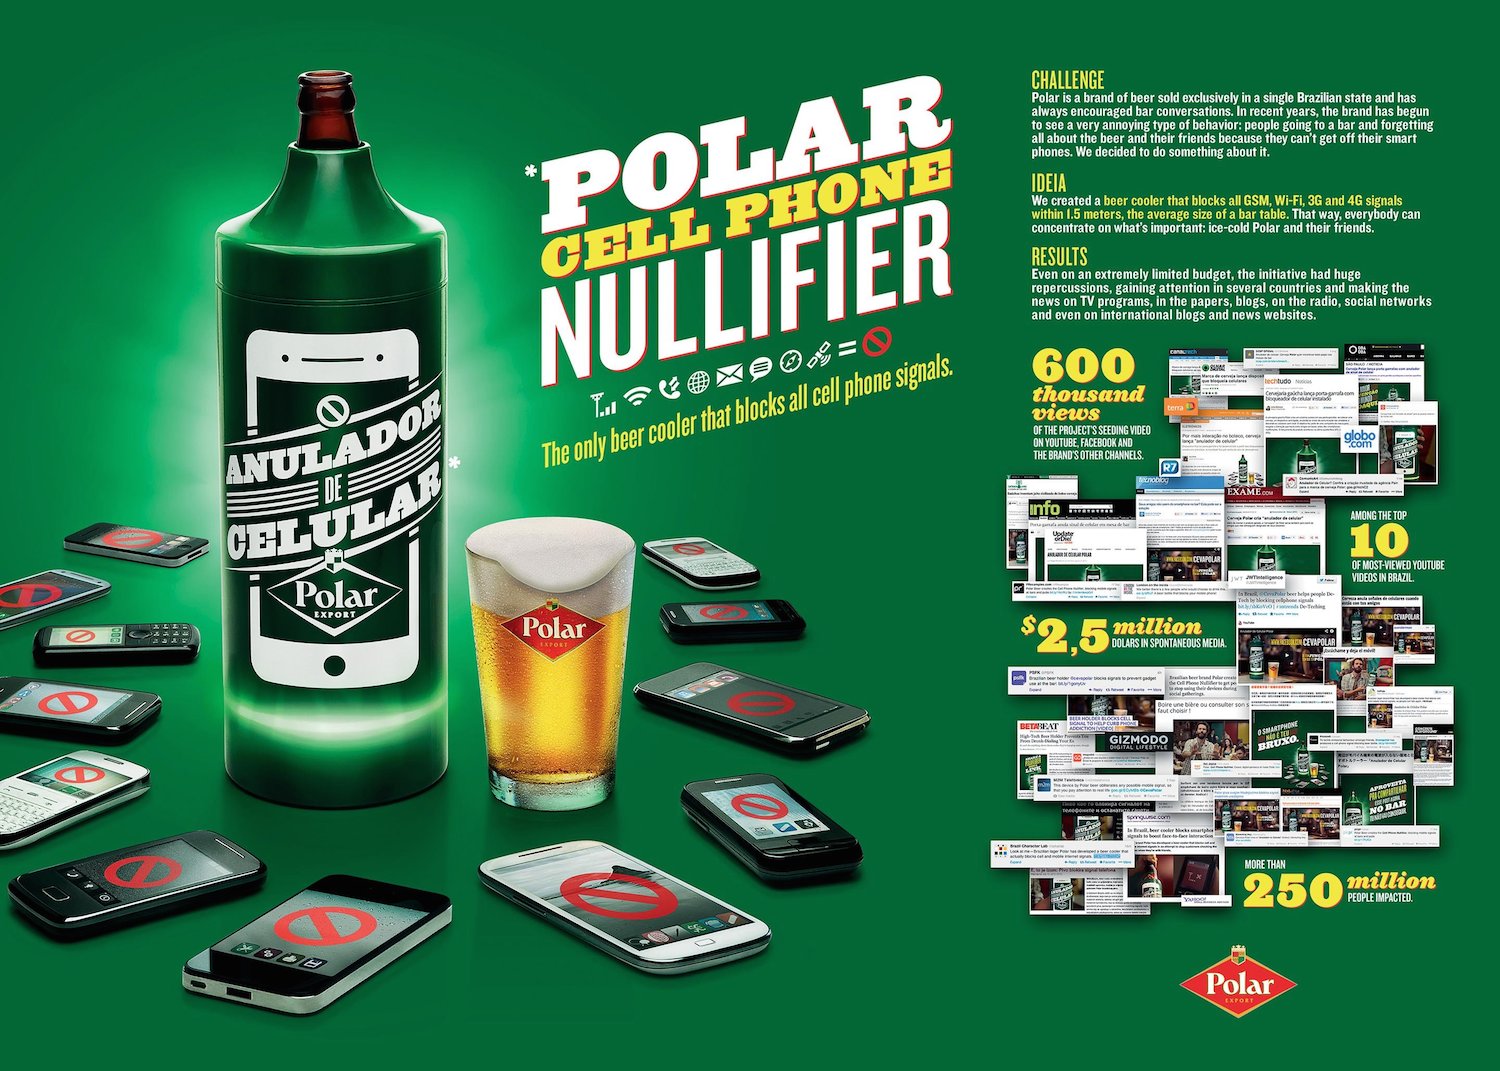 polar_cellphone_nullifier